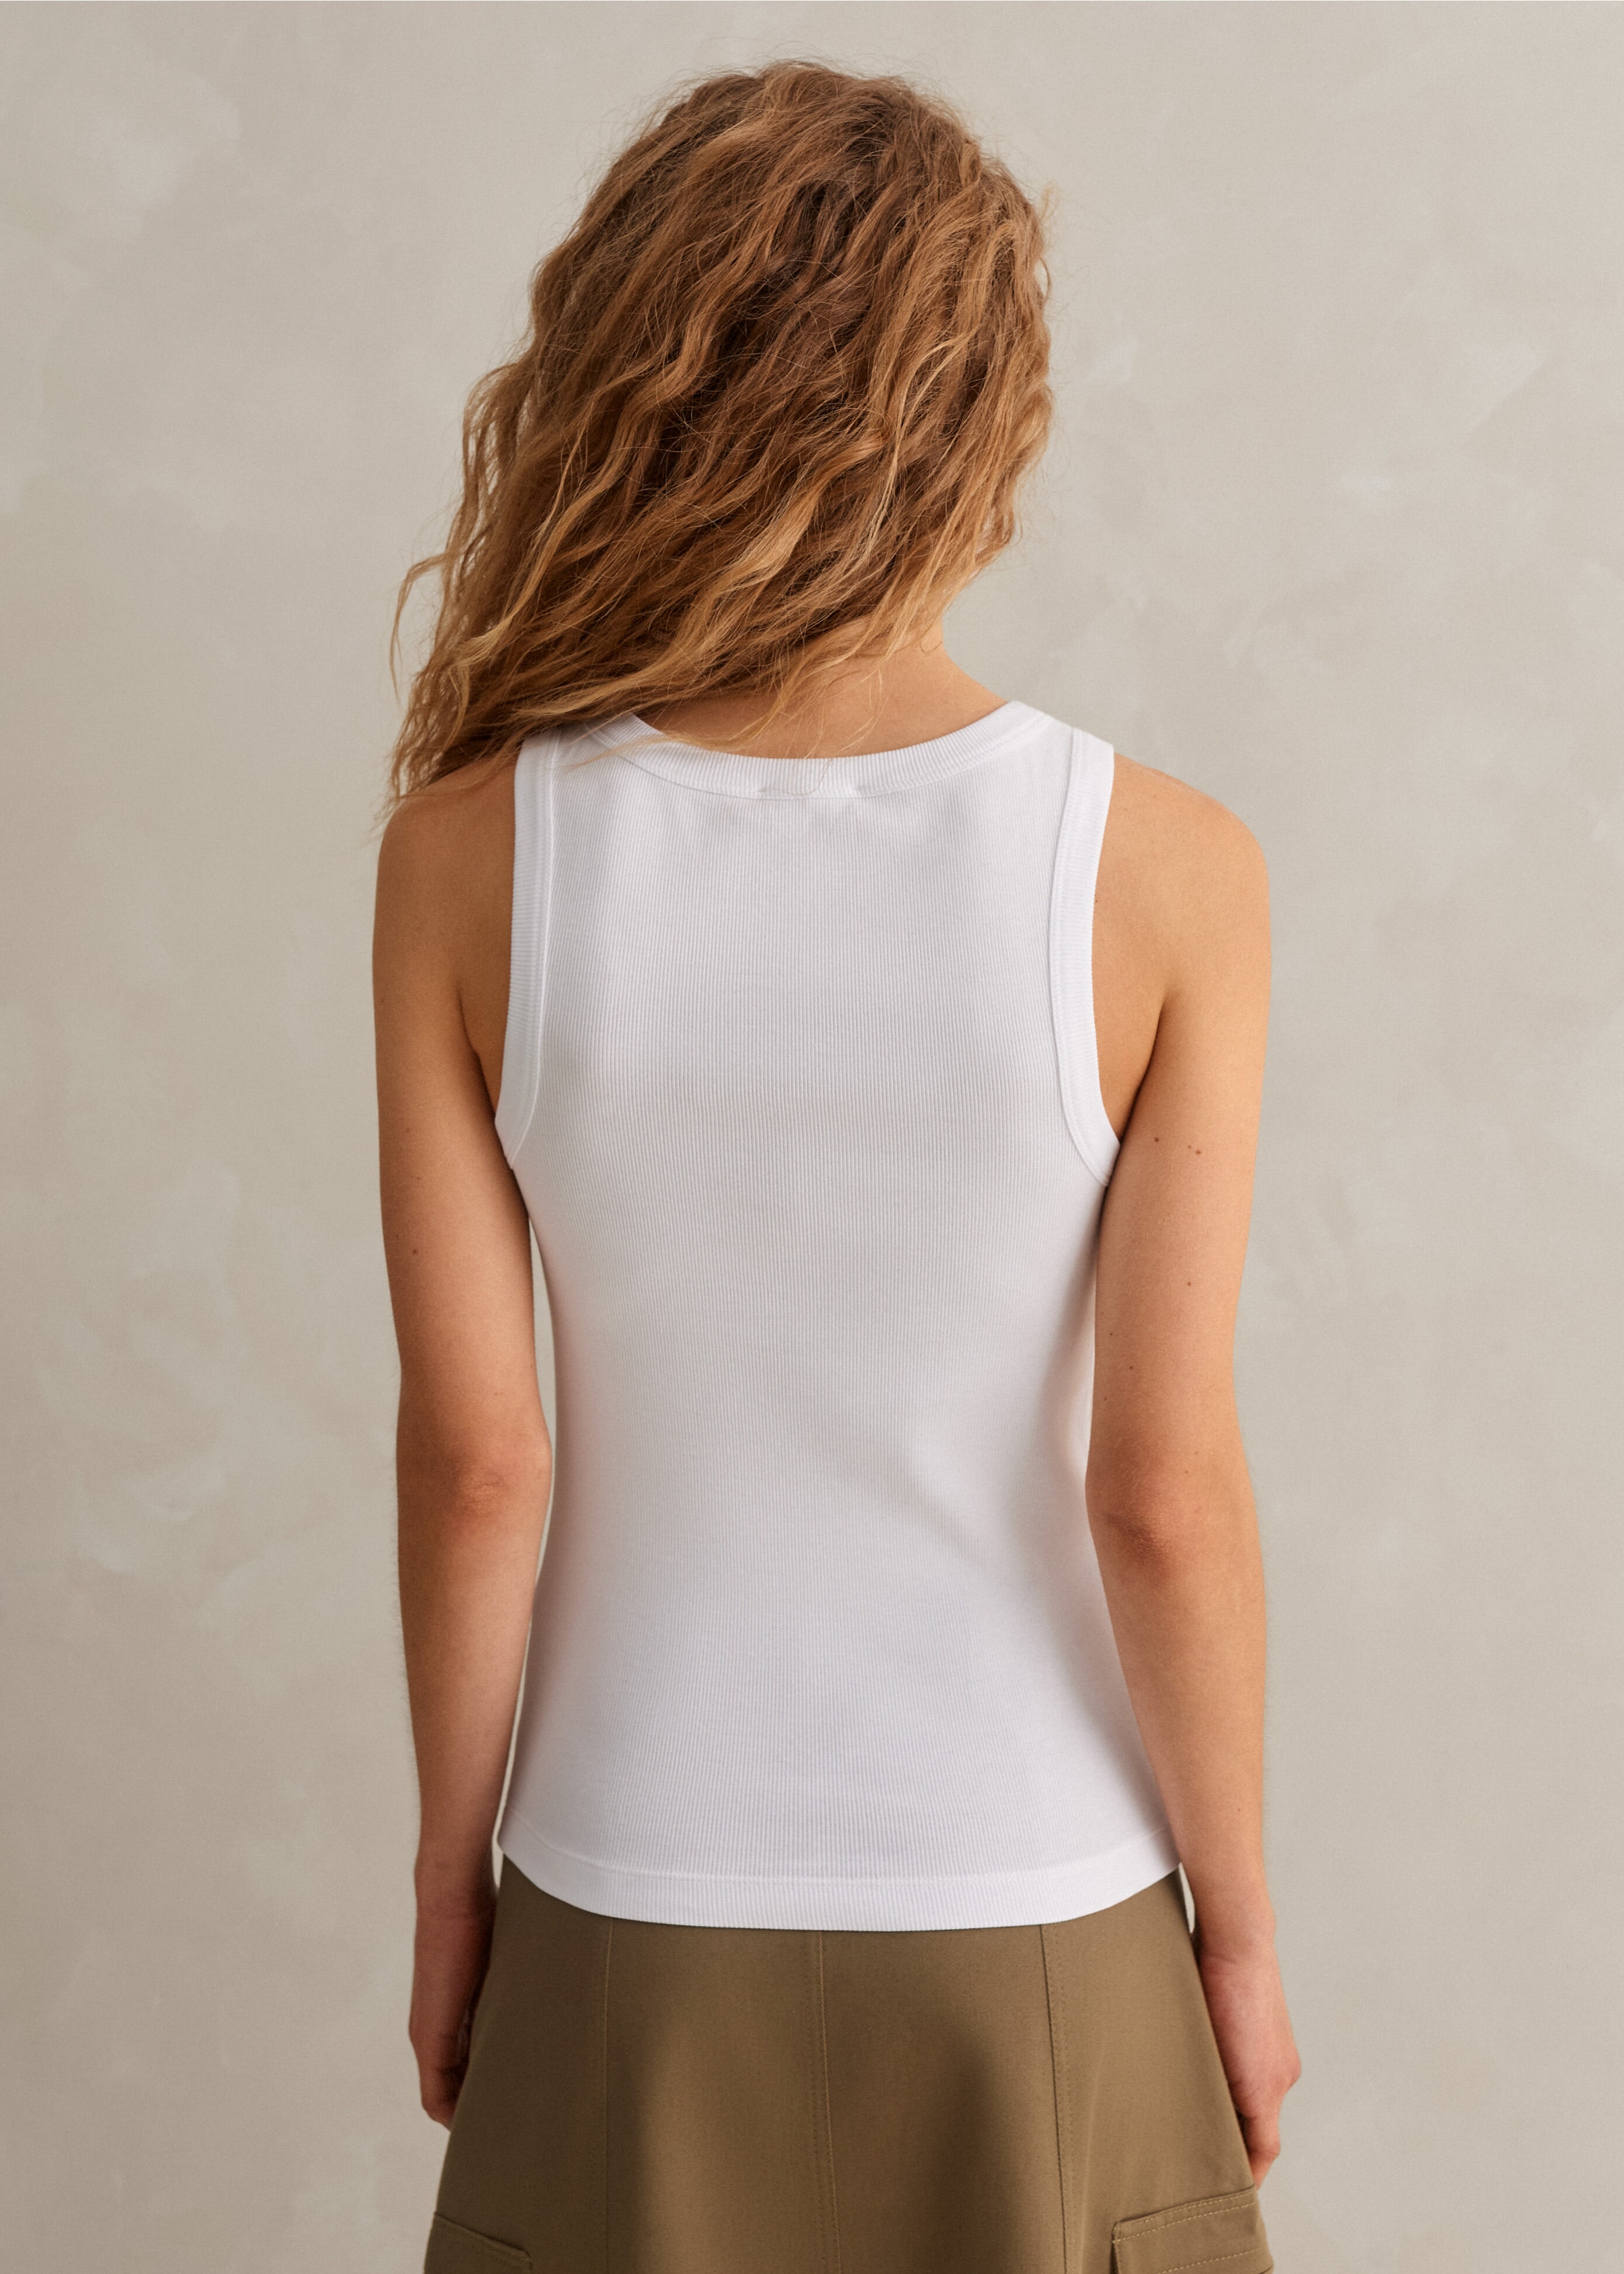 Women's wide shoulder strap vest, White crew neck Modal vest